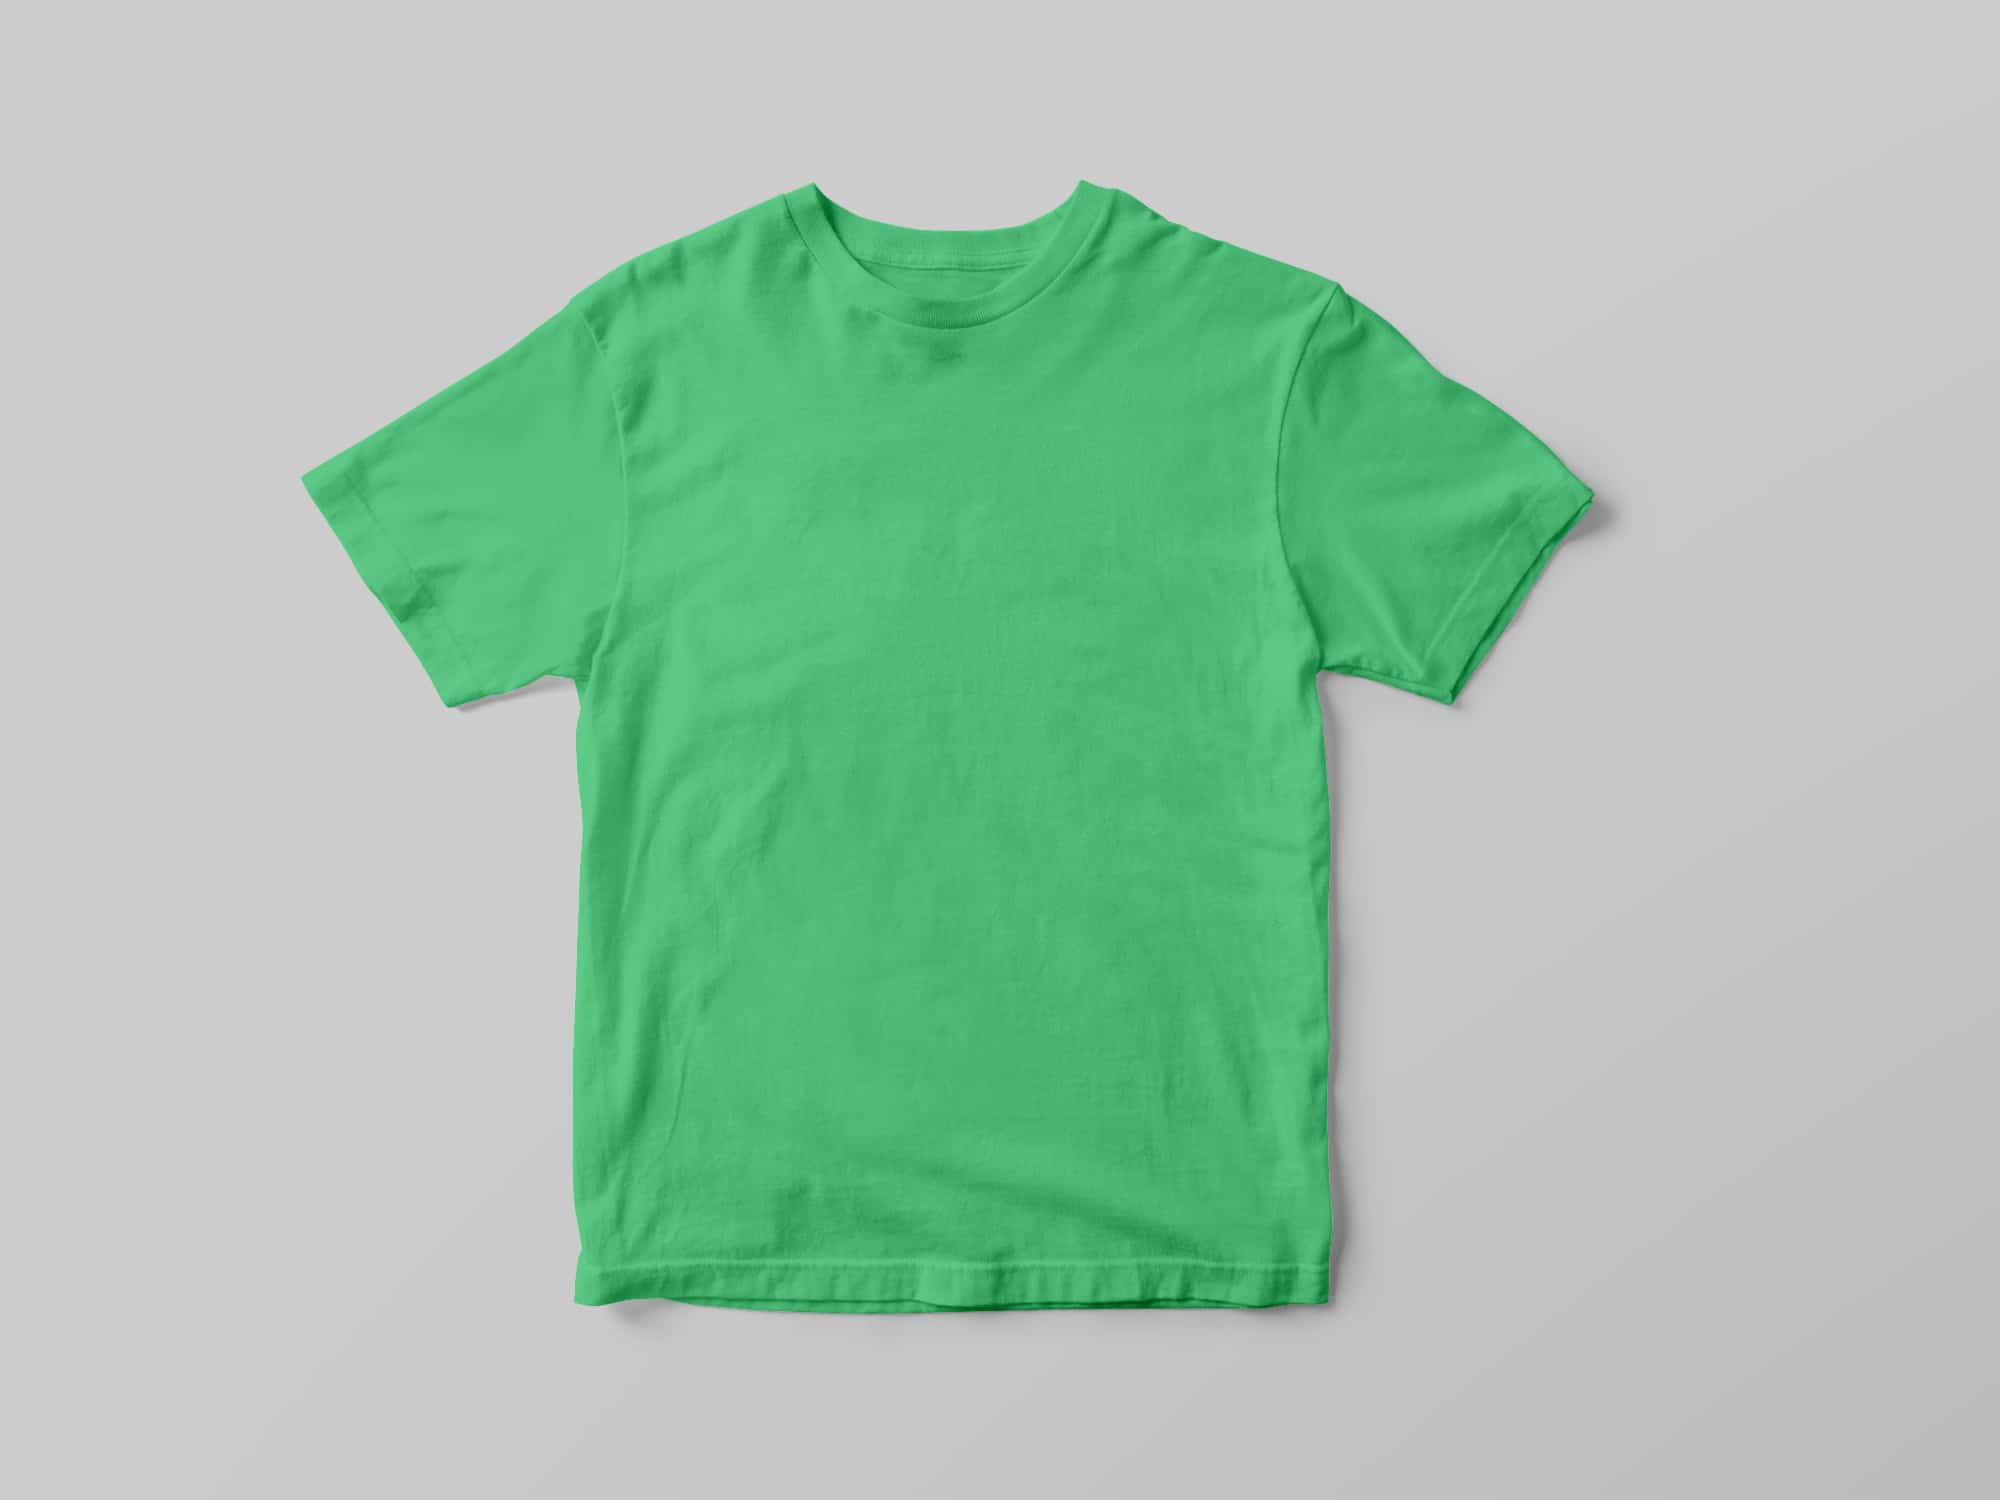 T-Shirt Mockup | The Mockup Club